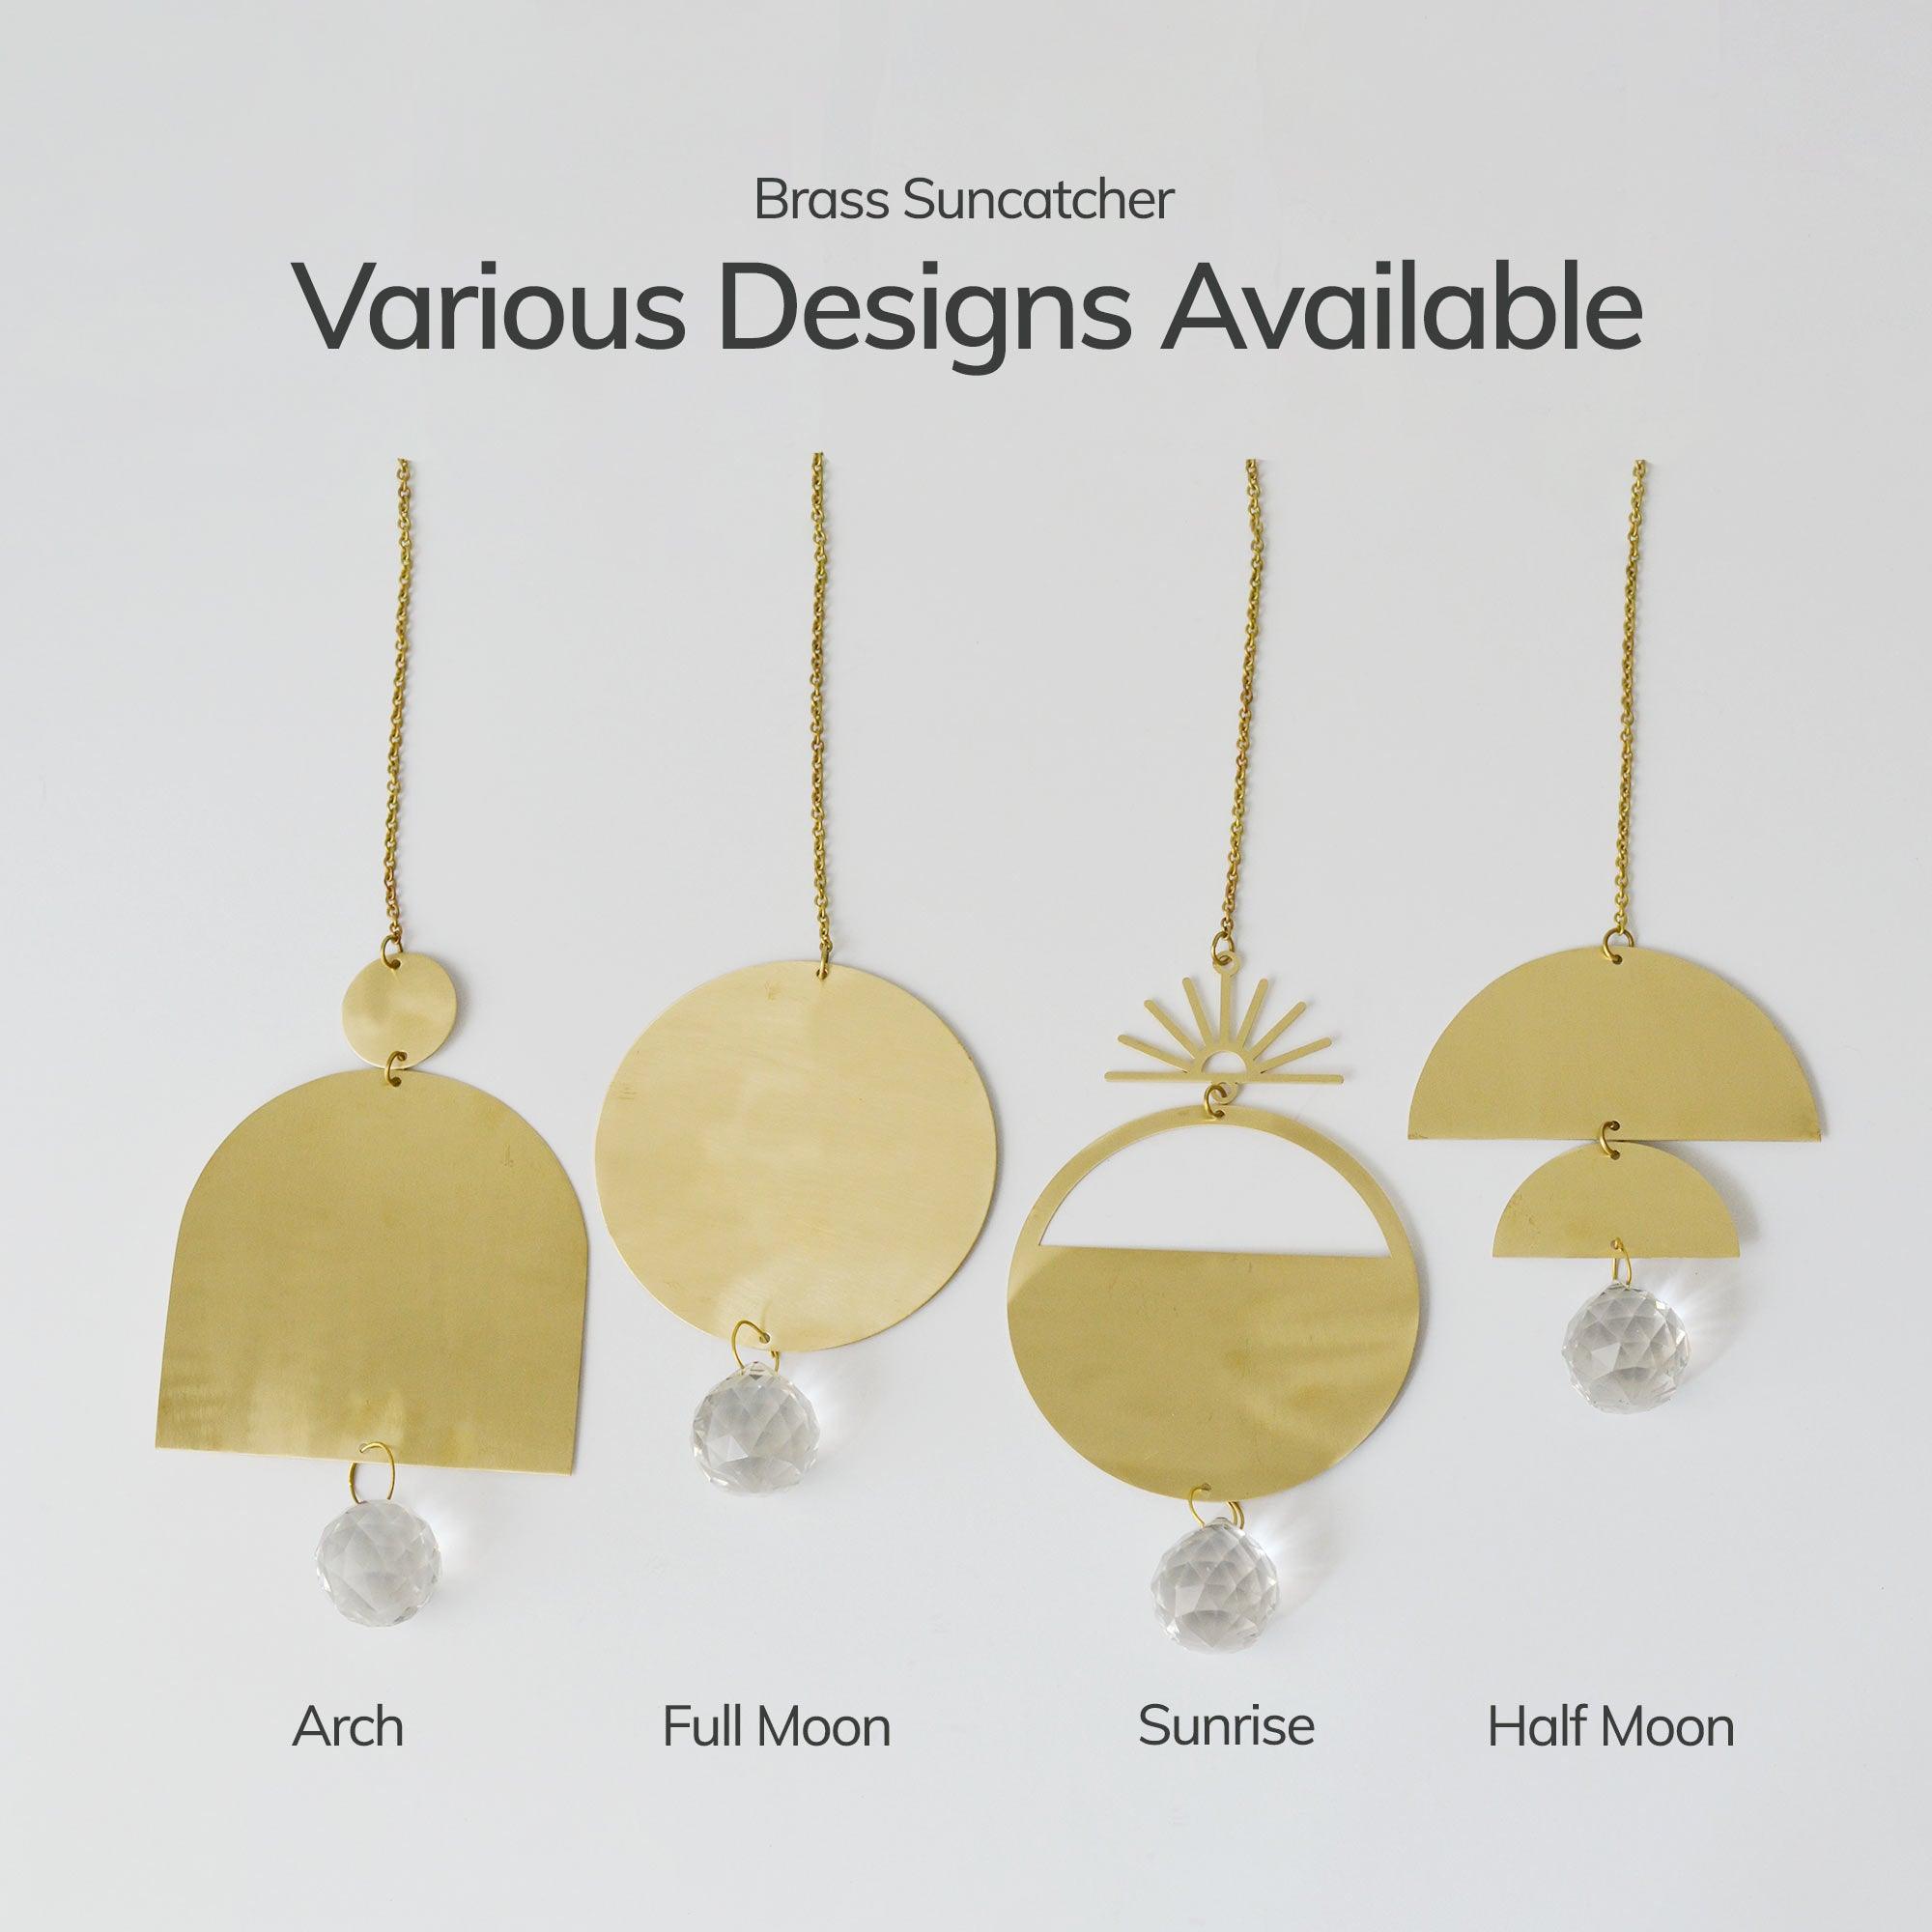 4 brass suncatcher concepts: arch, full moon, sunrise, half moon